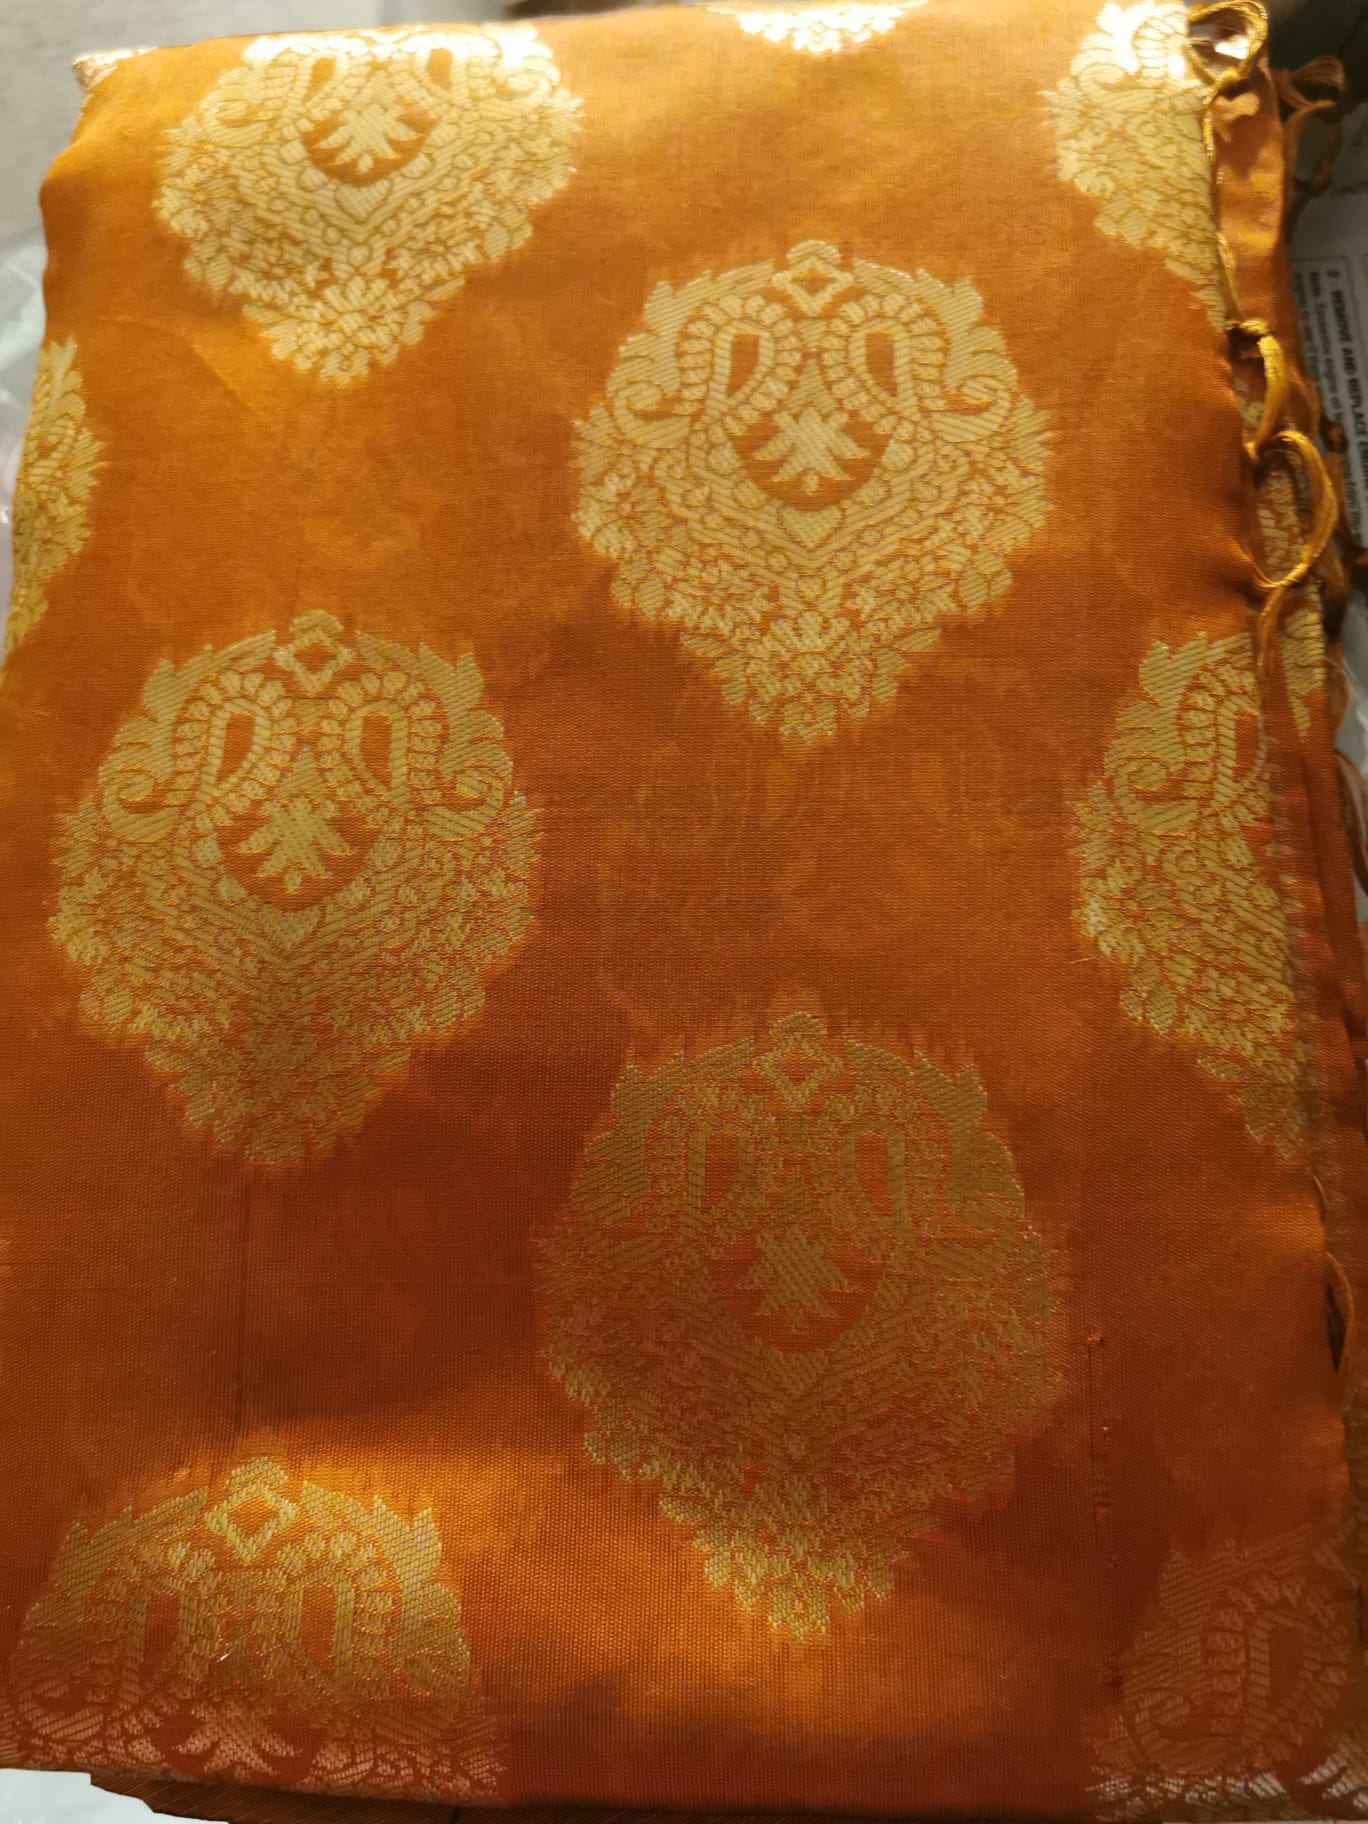 Orange Banasari Silk Saree Indian Clothing in Denver, CO, Aurora, CO, Boulder, CO, Fort Collins, CO, Colorado Springs, CO, Parker, CO, Highlands Ranch, CO, Cherry Creek, CO, Centennial, CO, and Longmont, CO. NATIONWIDE SHIPPING USA- India Fashion X